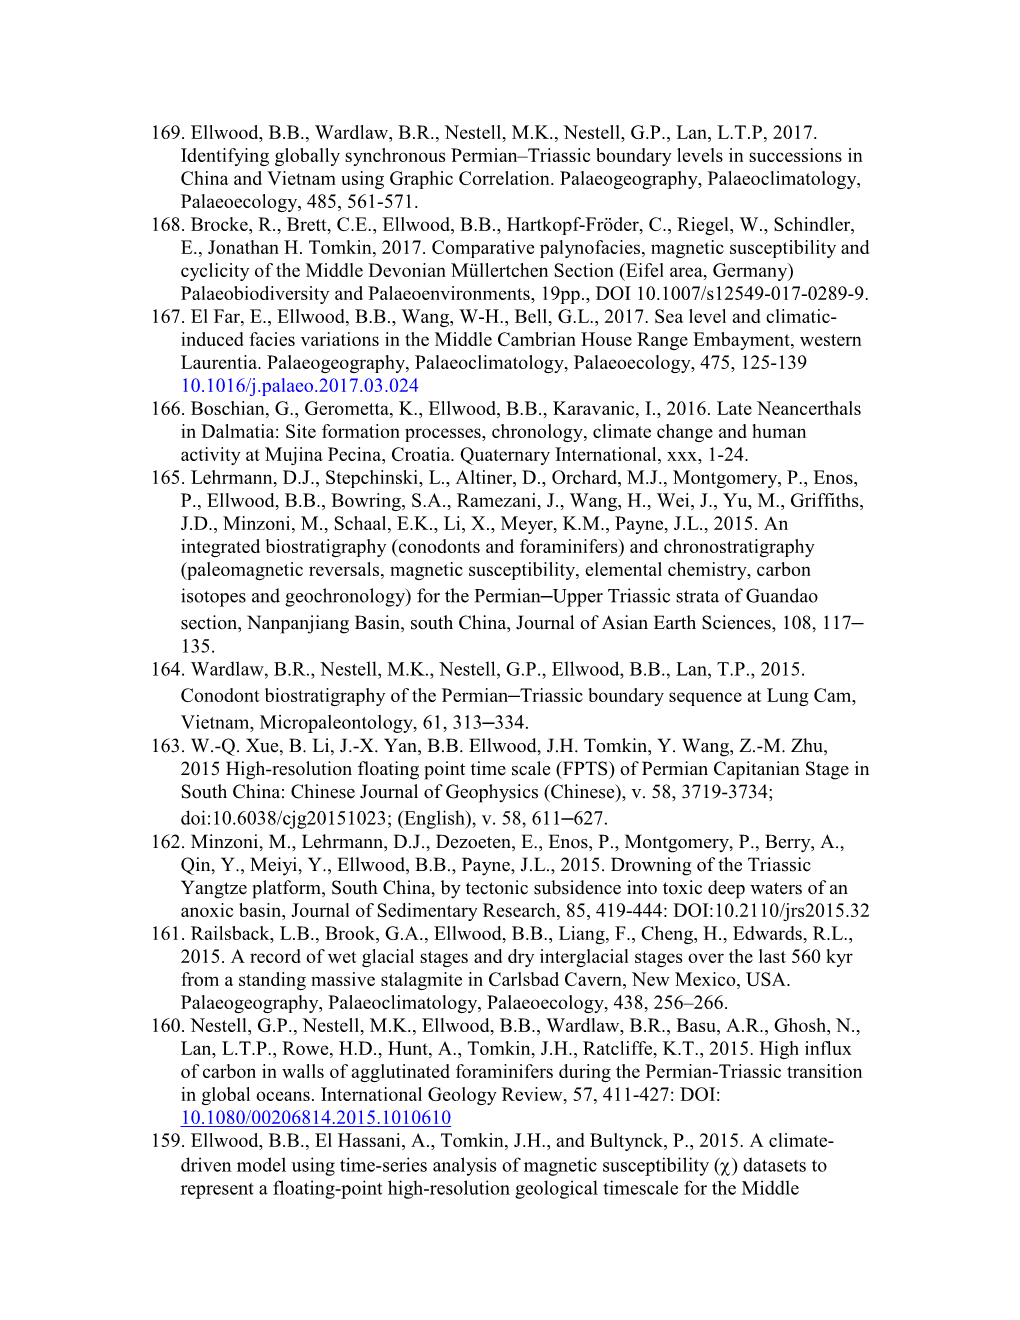 169. Ellwood, B.B., Wardlaw, B.R., Nestell, M.K., Nestell, G.P., Lan, L.T.P, 2017. Identifying Globally Synchronous Permian–Tr